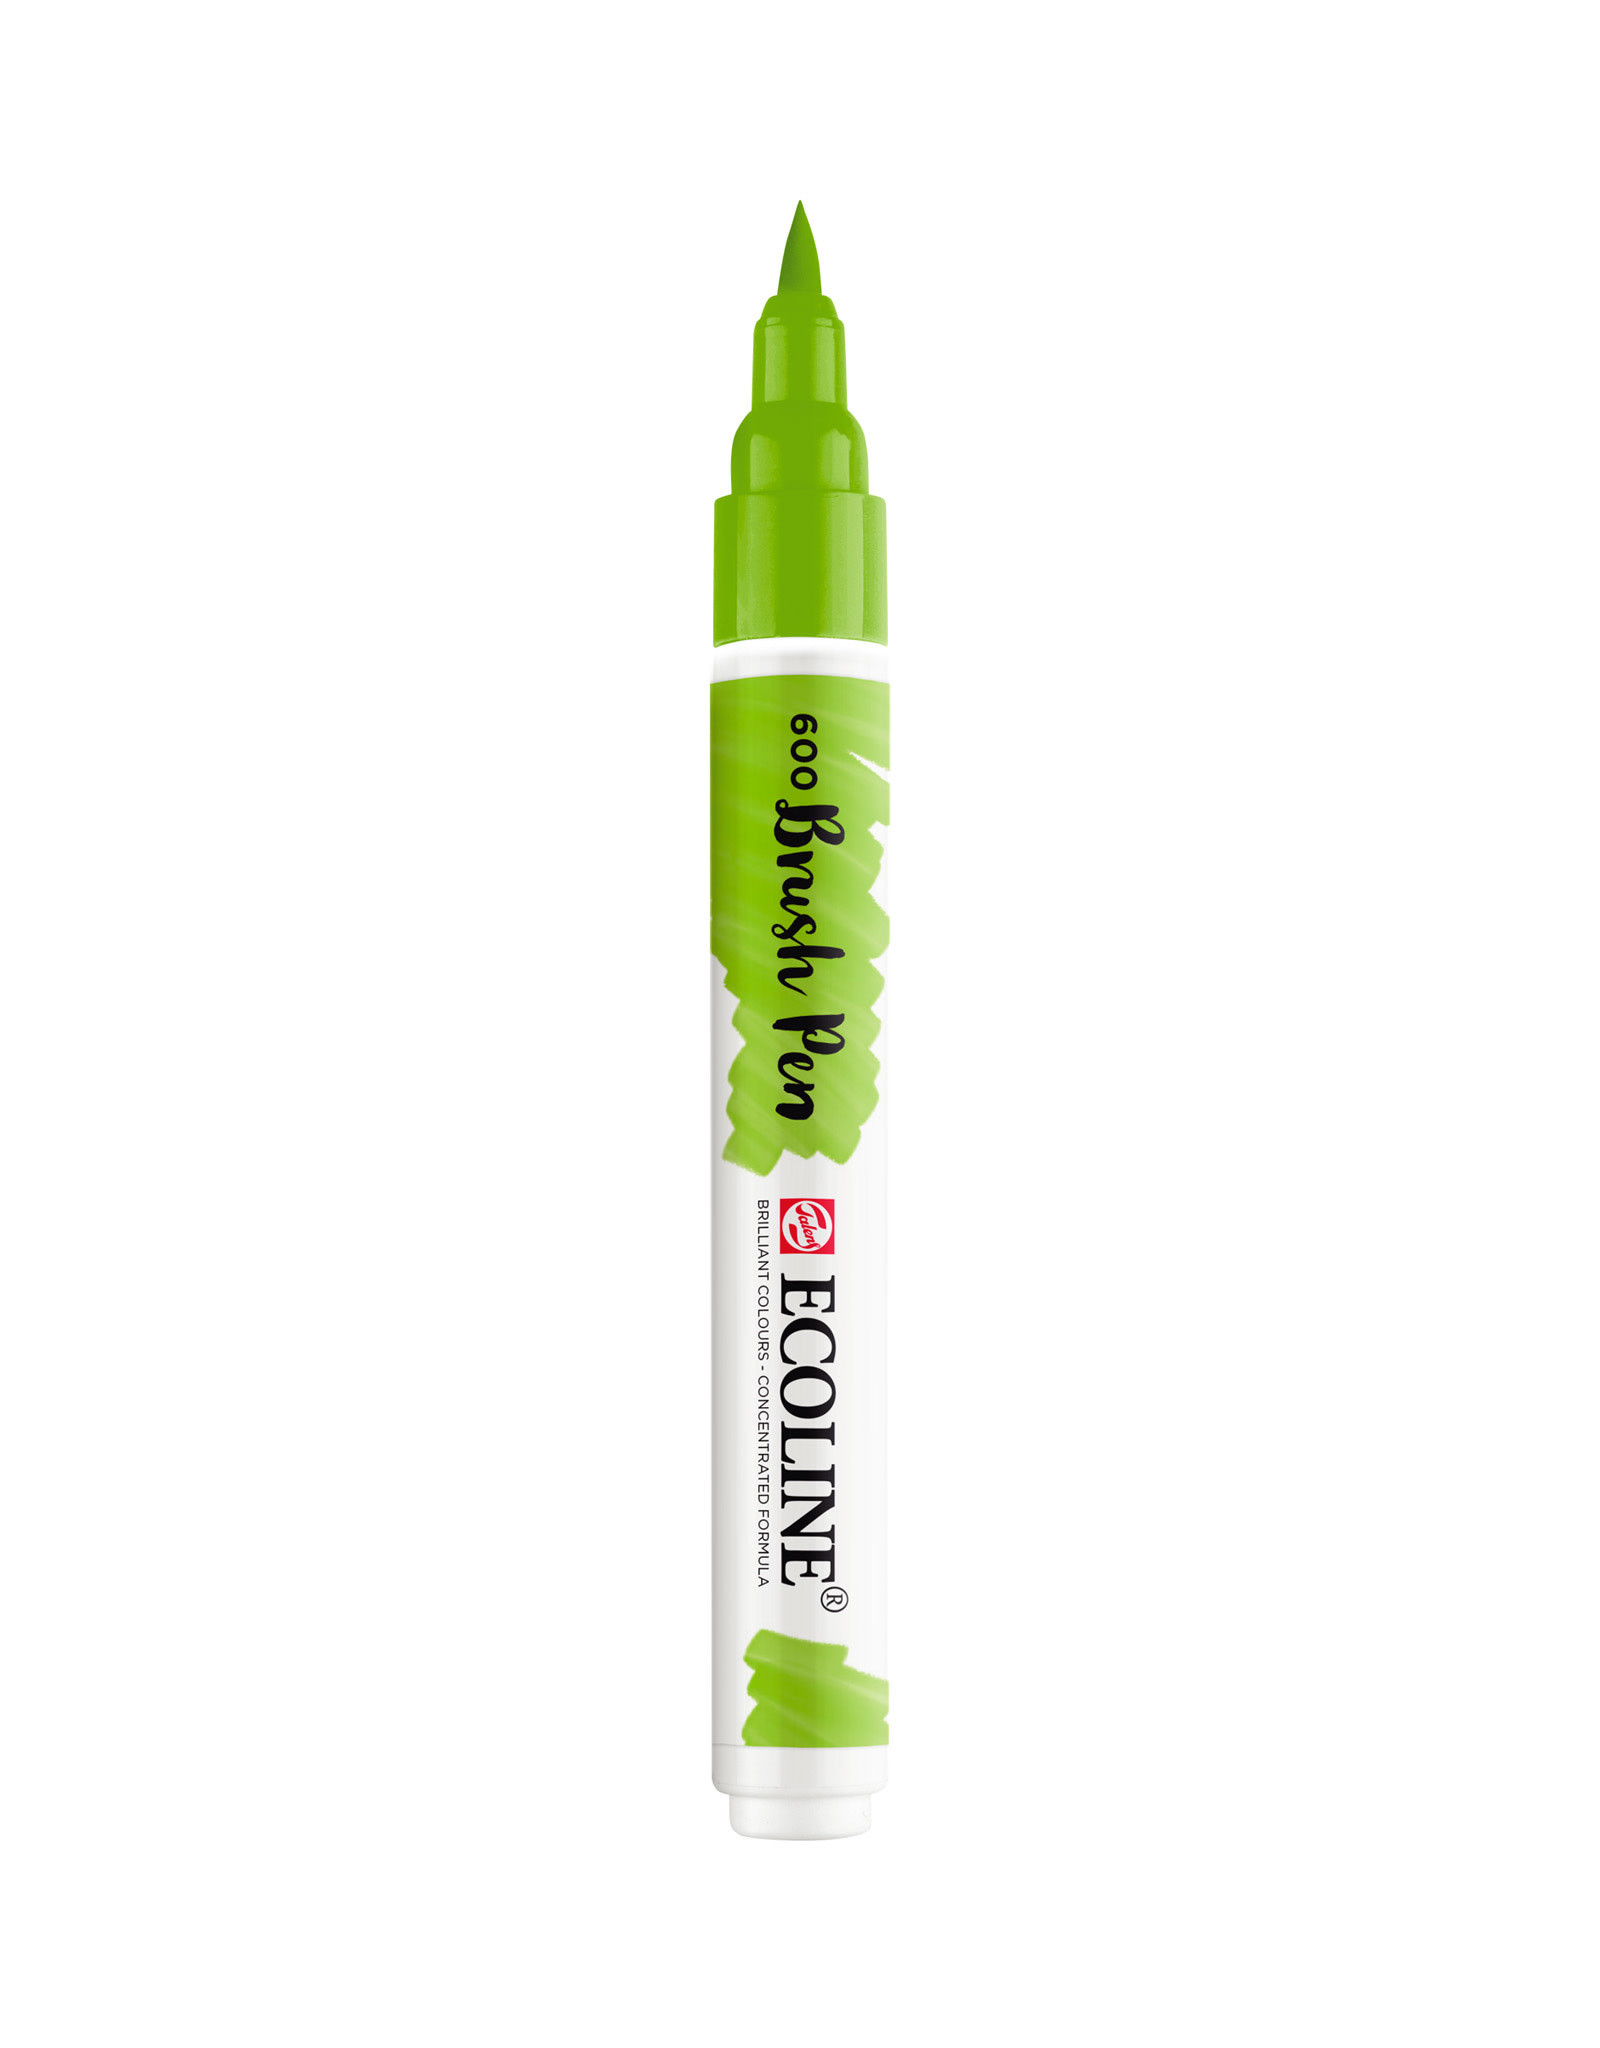 Royal Talens Ecoline Watercolour Brush Pen, Green